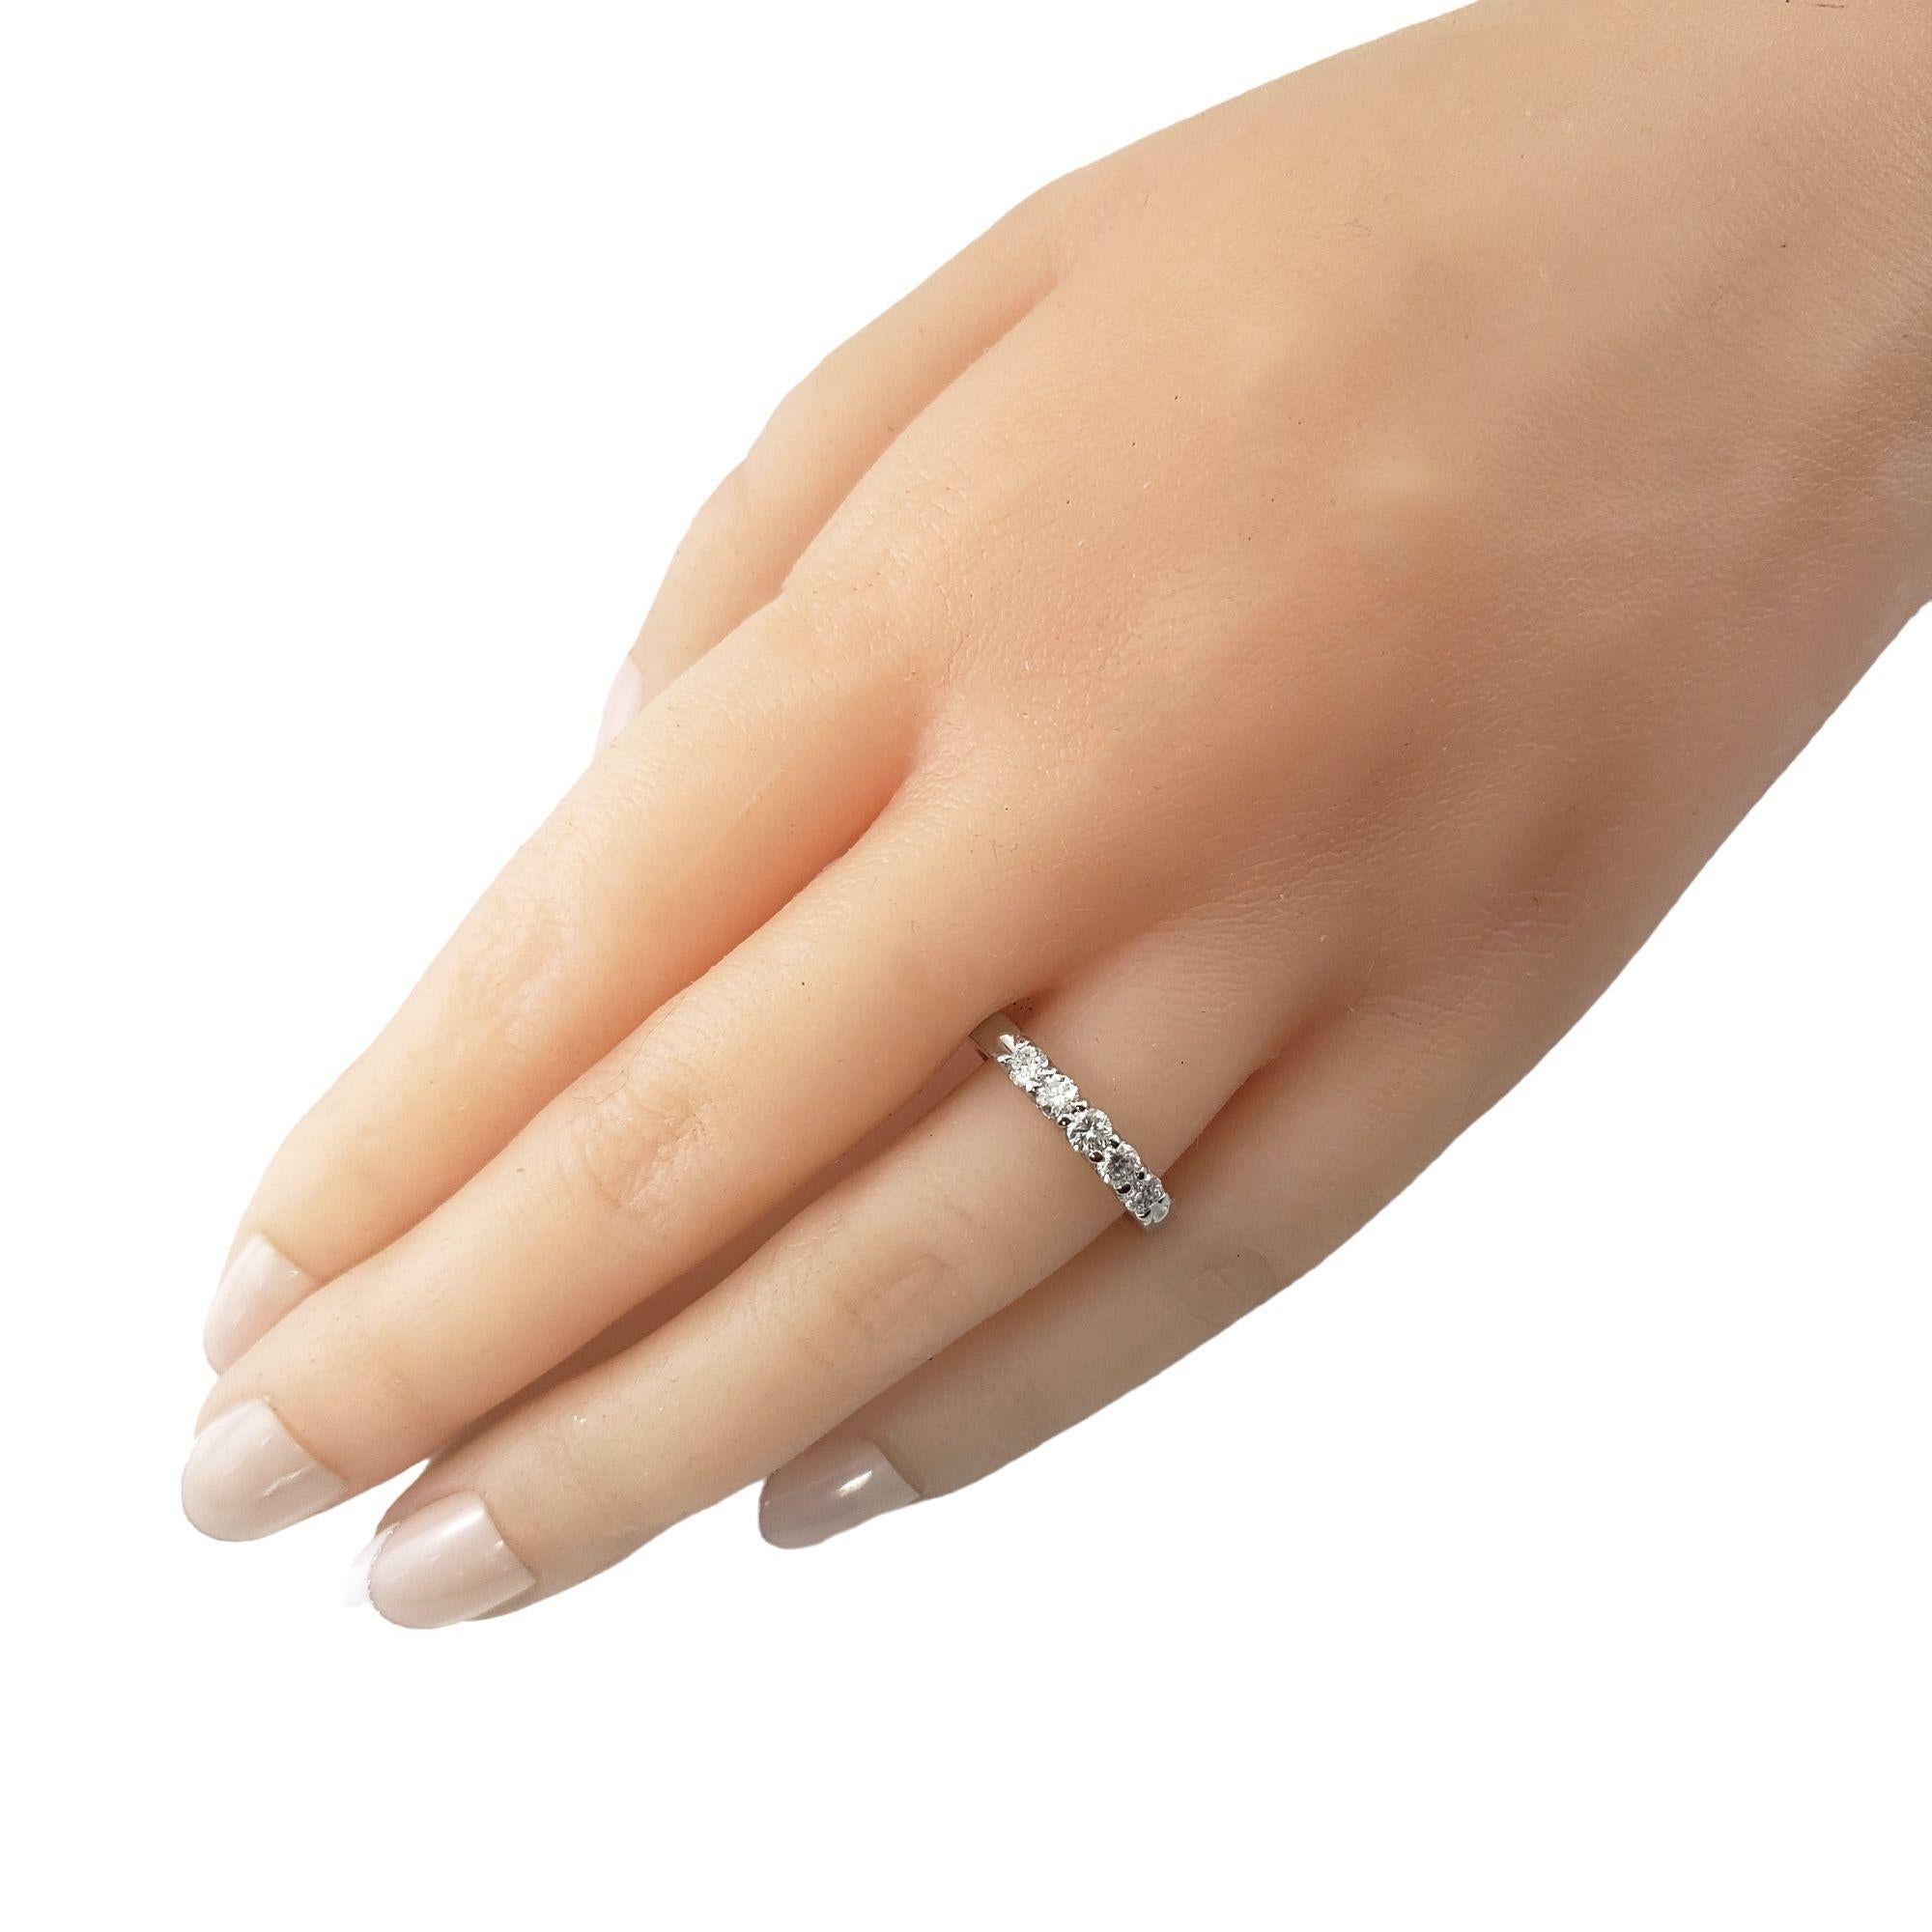  Platinum and Diamond Wedding Band Ring Size 4.75 #15067 2